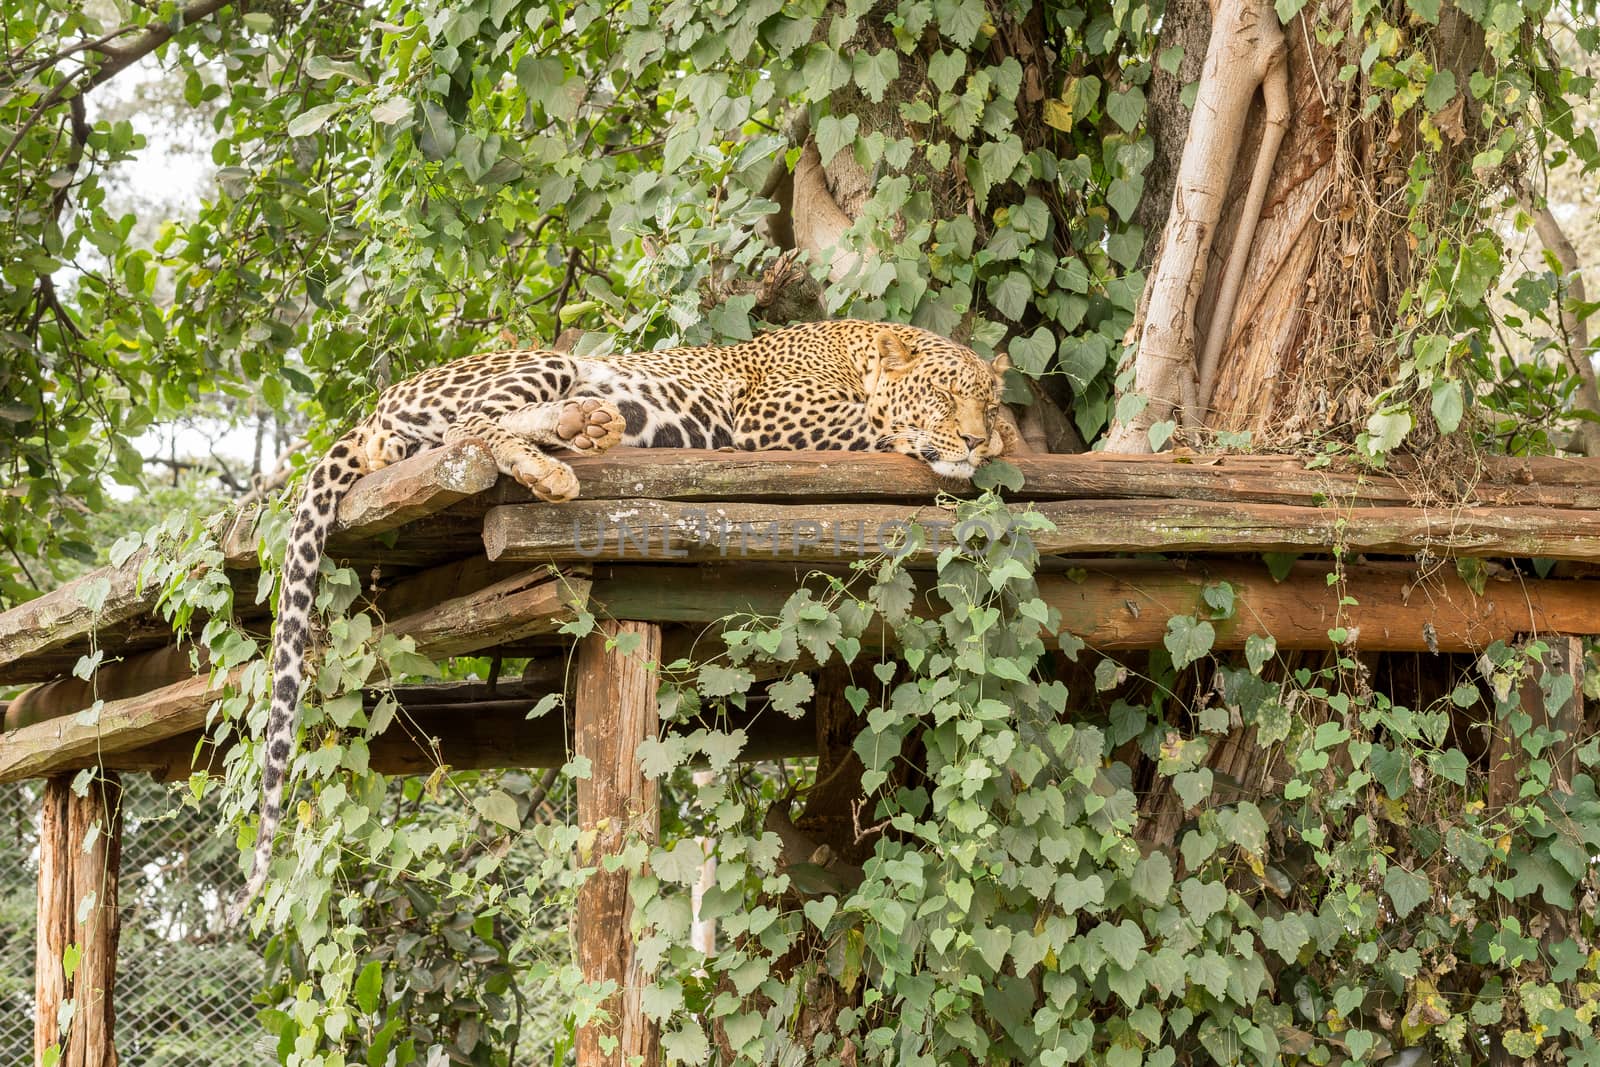 A leopard sleeping on a high platform at the Nairobi National Park in Kenya